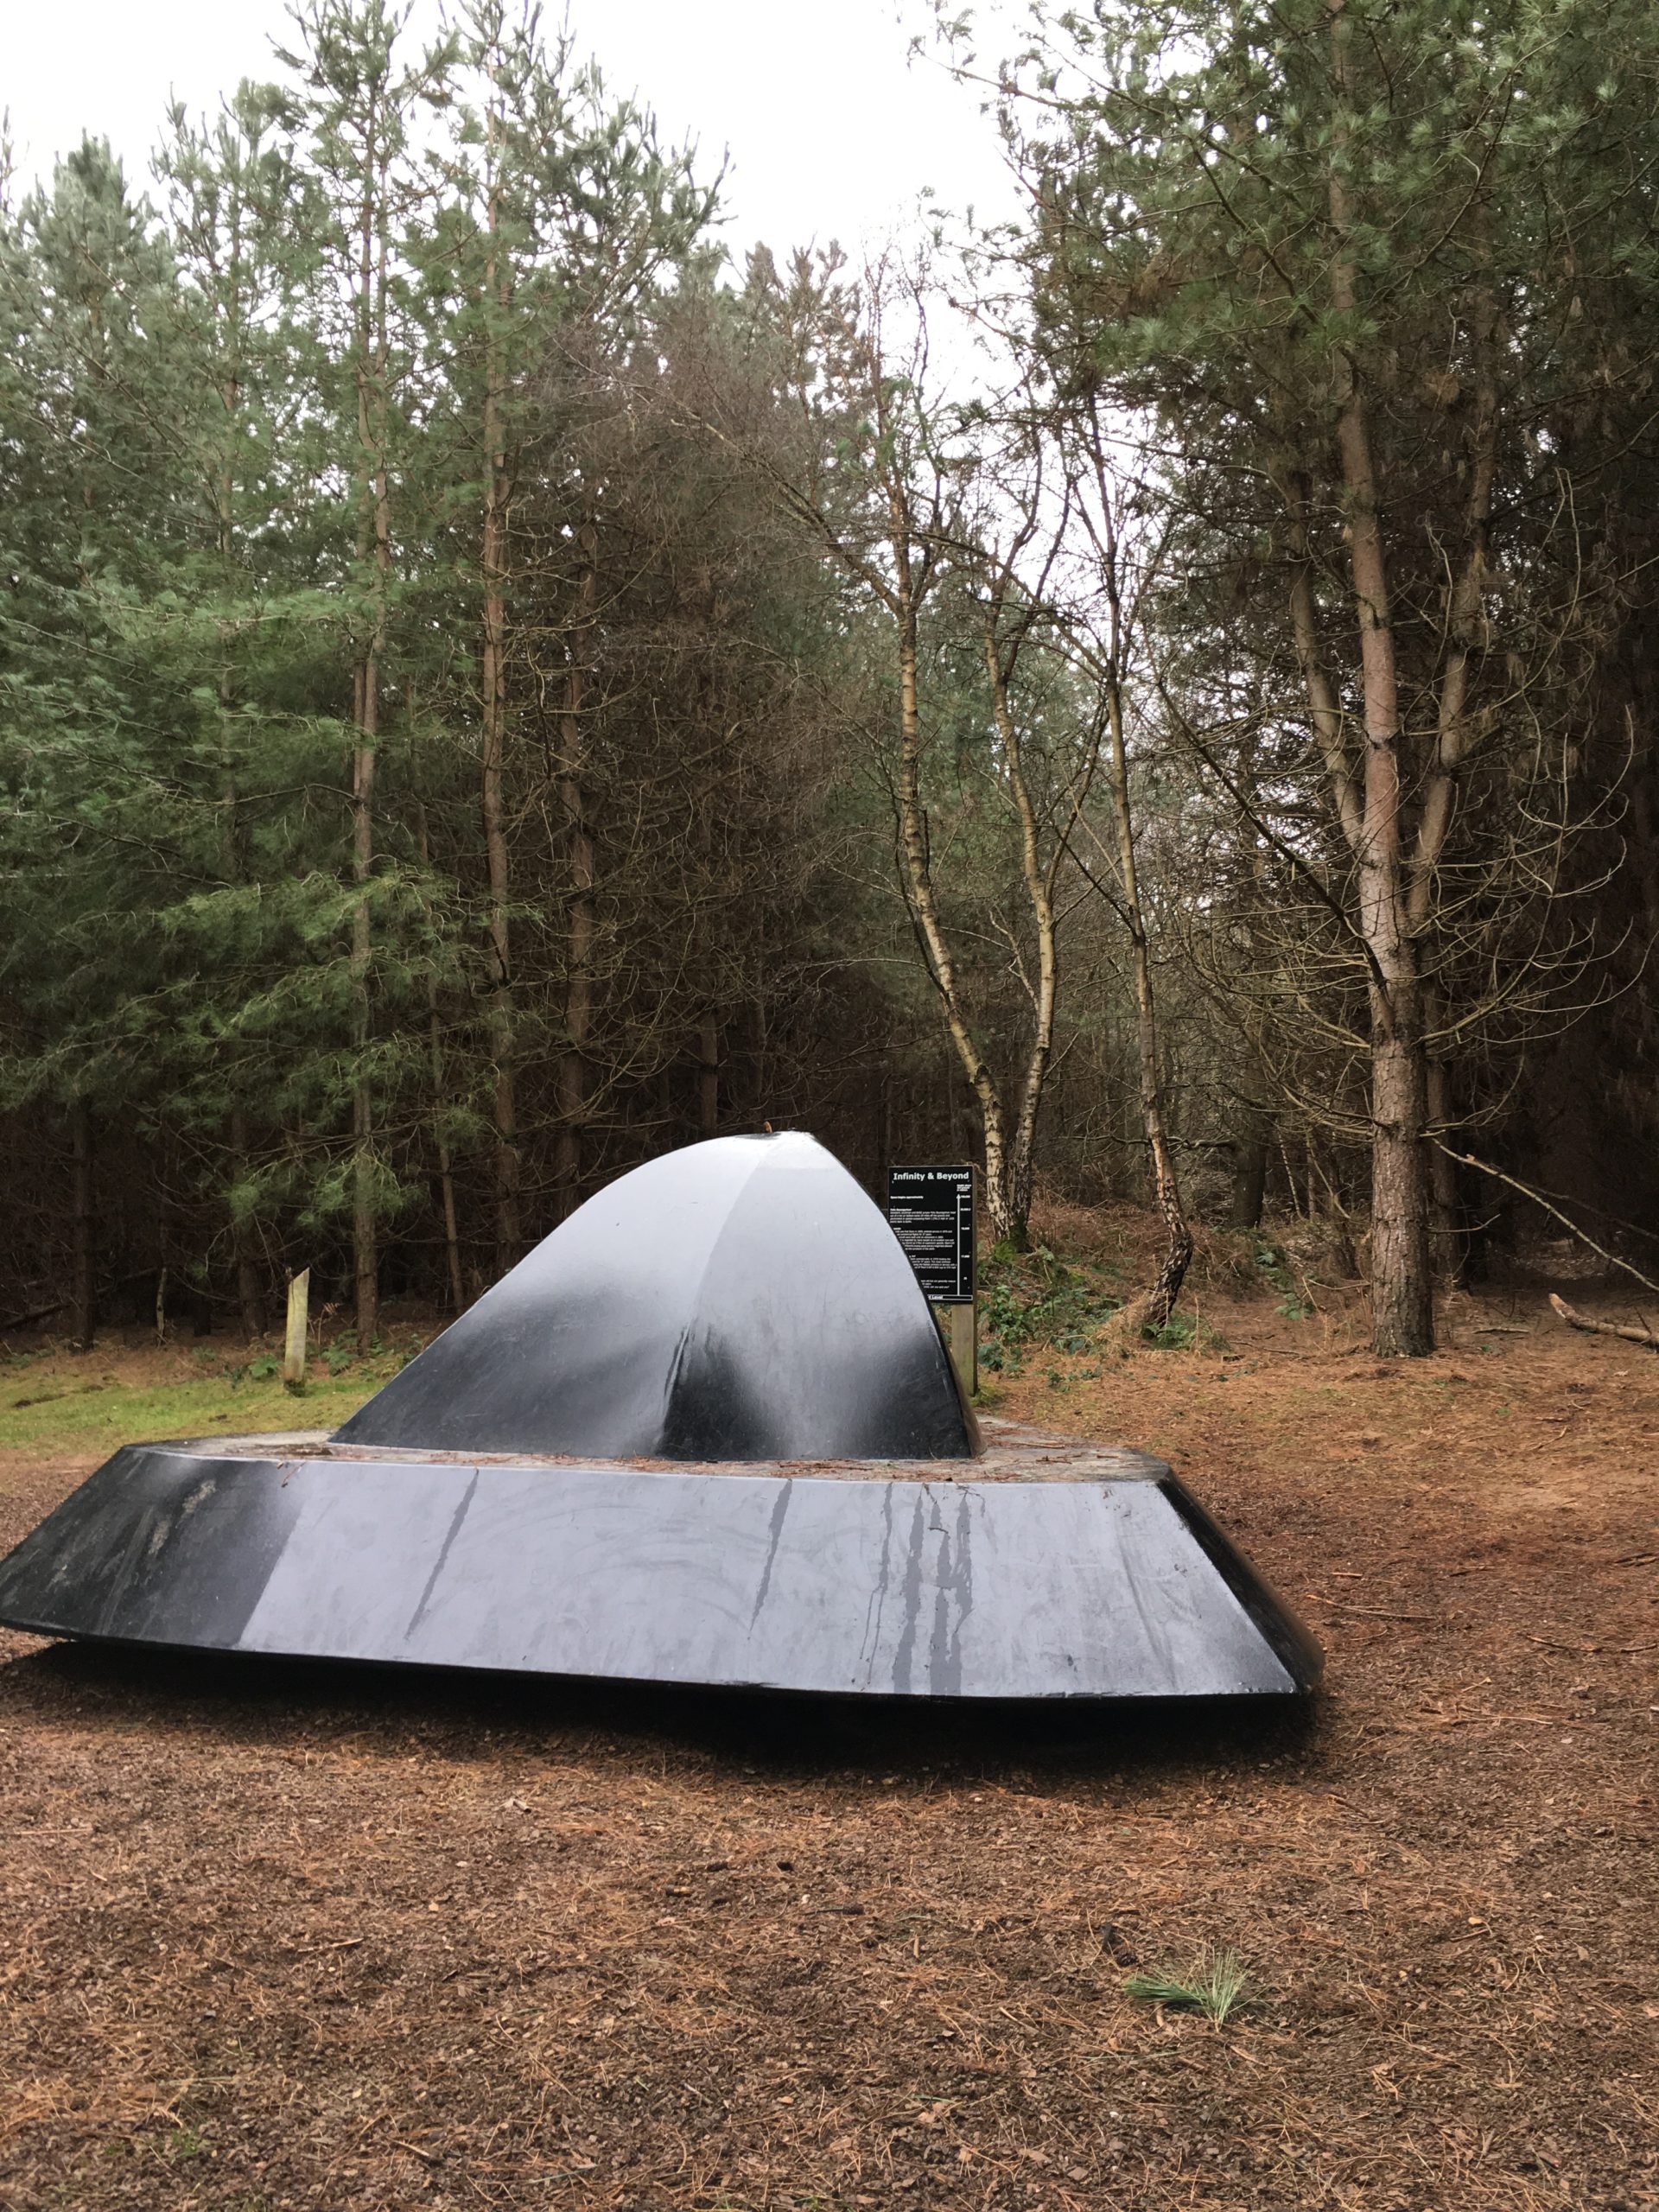 UFO Trail in Rendlesham